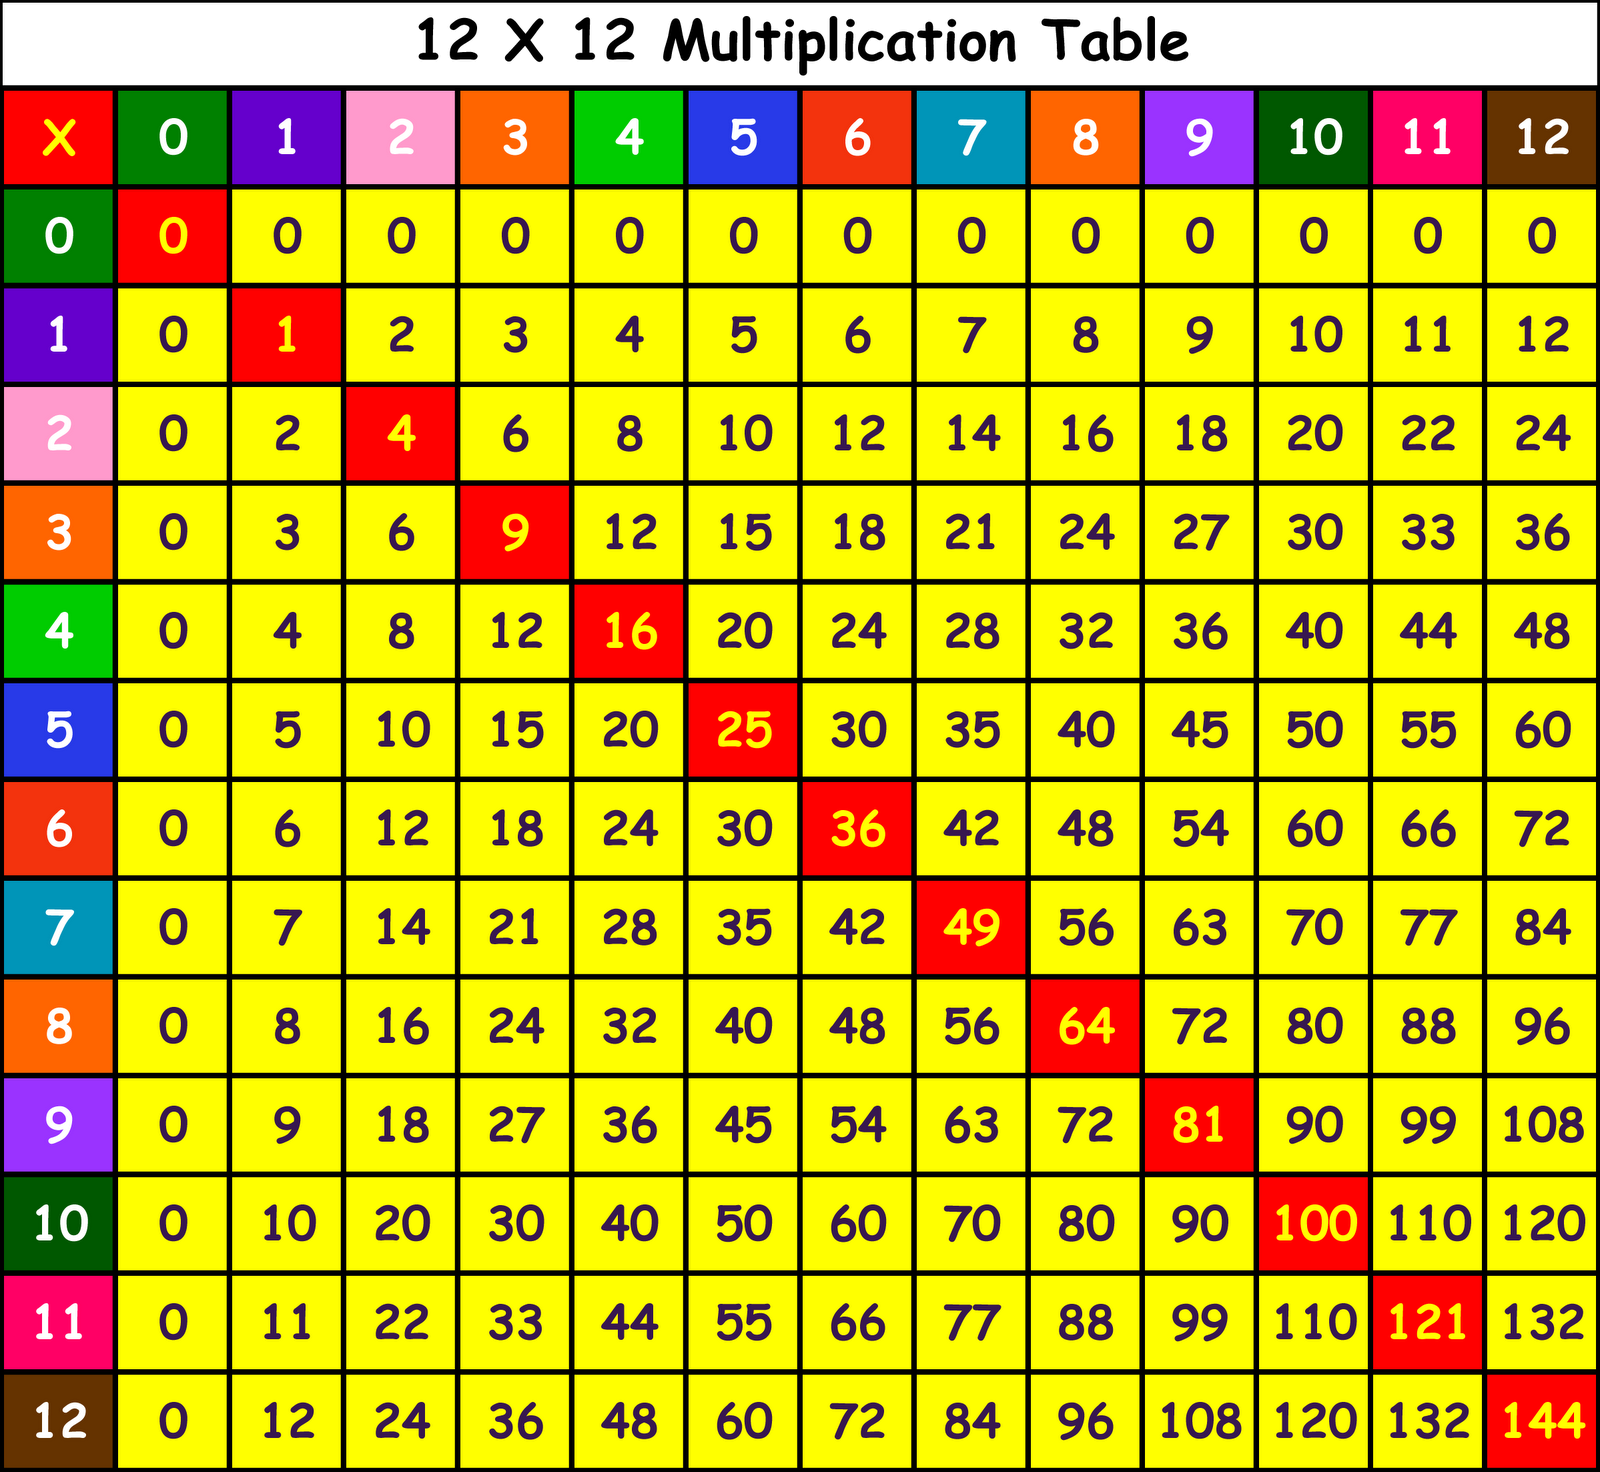 multiplication-chart-grid-printablemultiplication